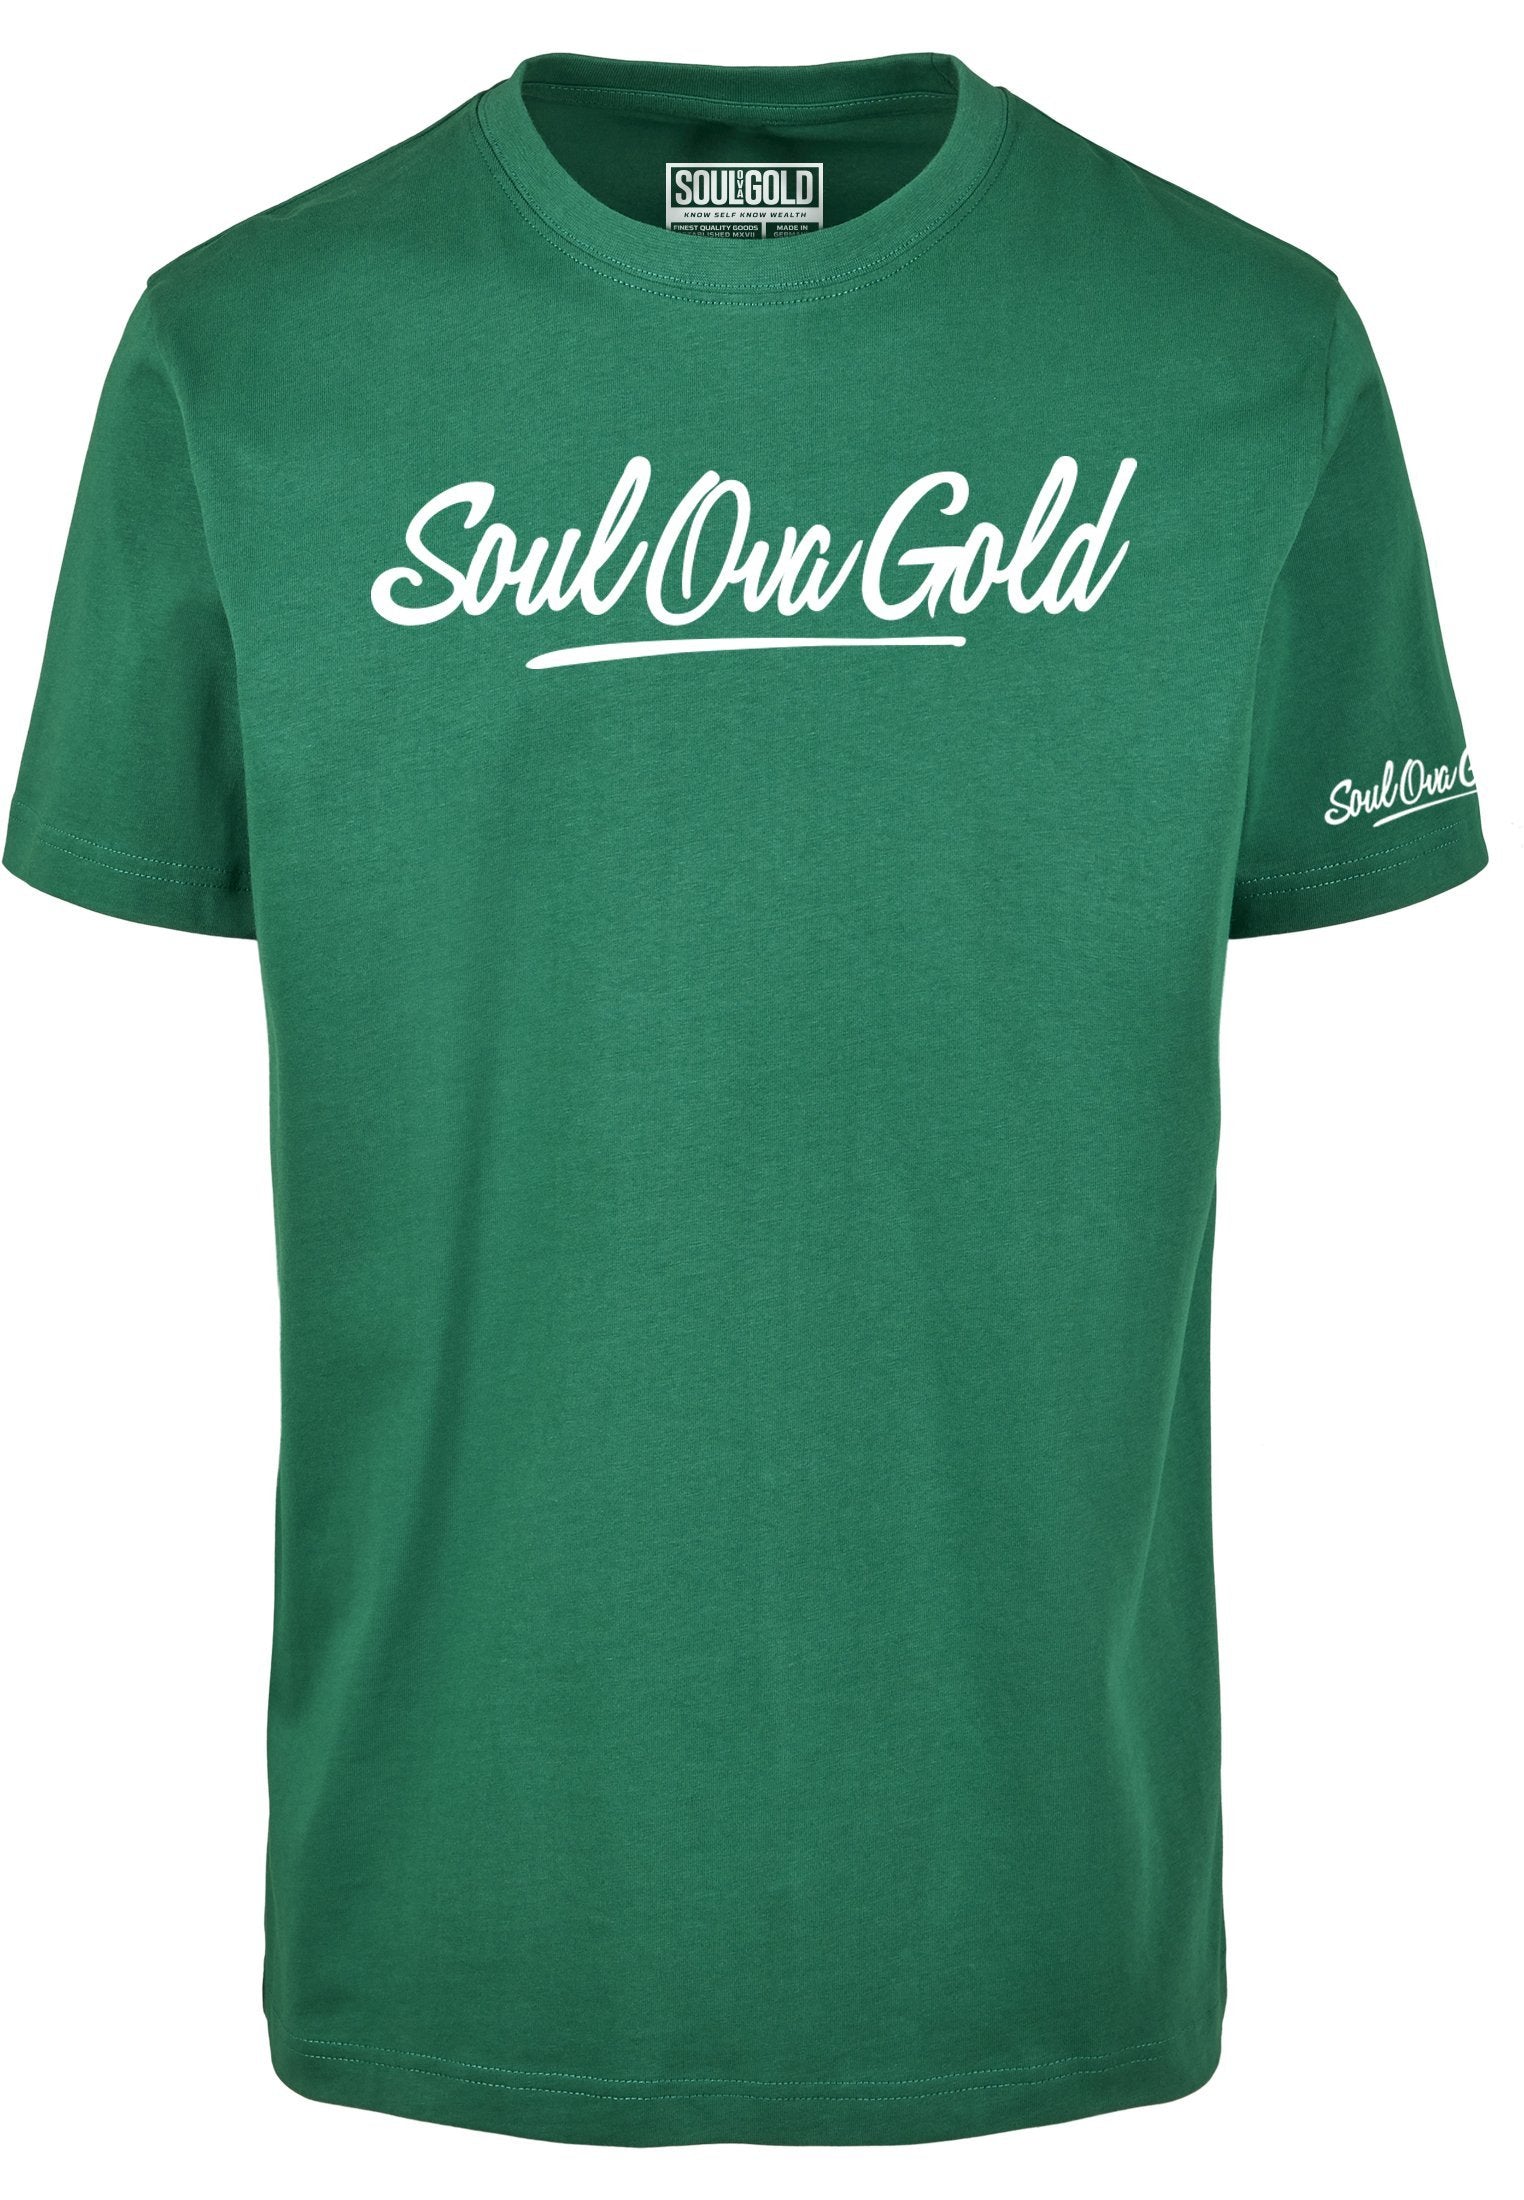 Soul Ova Gold Men's Tees Stick To The Script T-Shirt (Forrest Green)